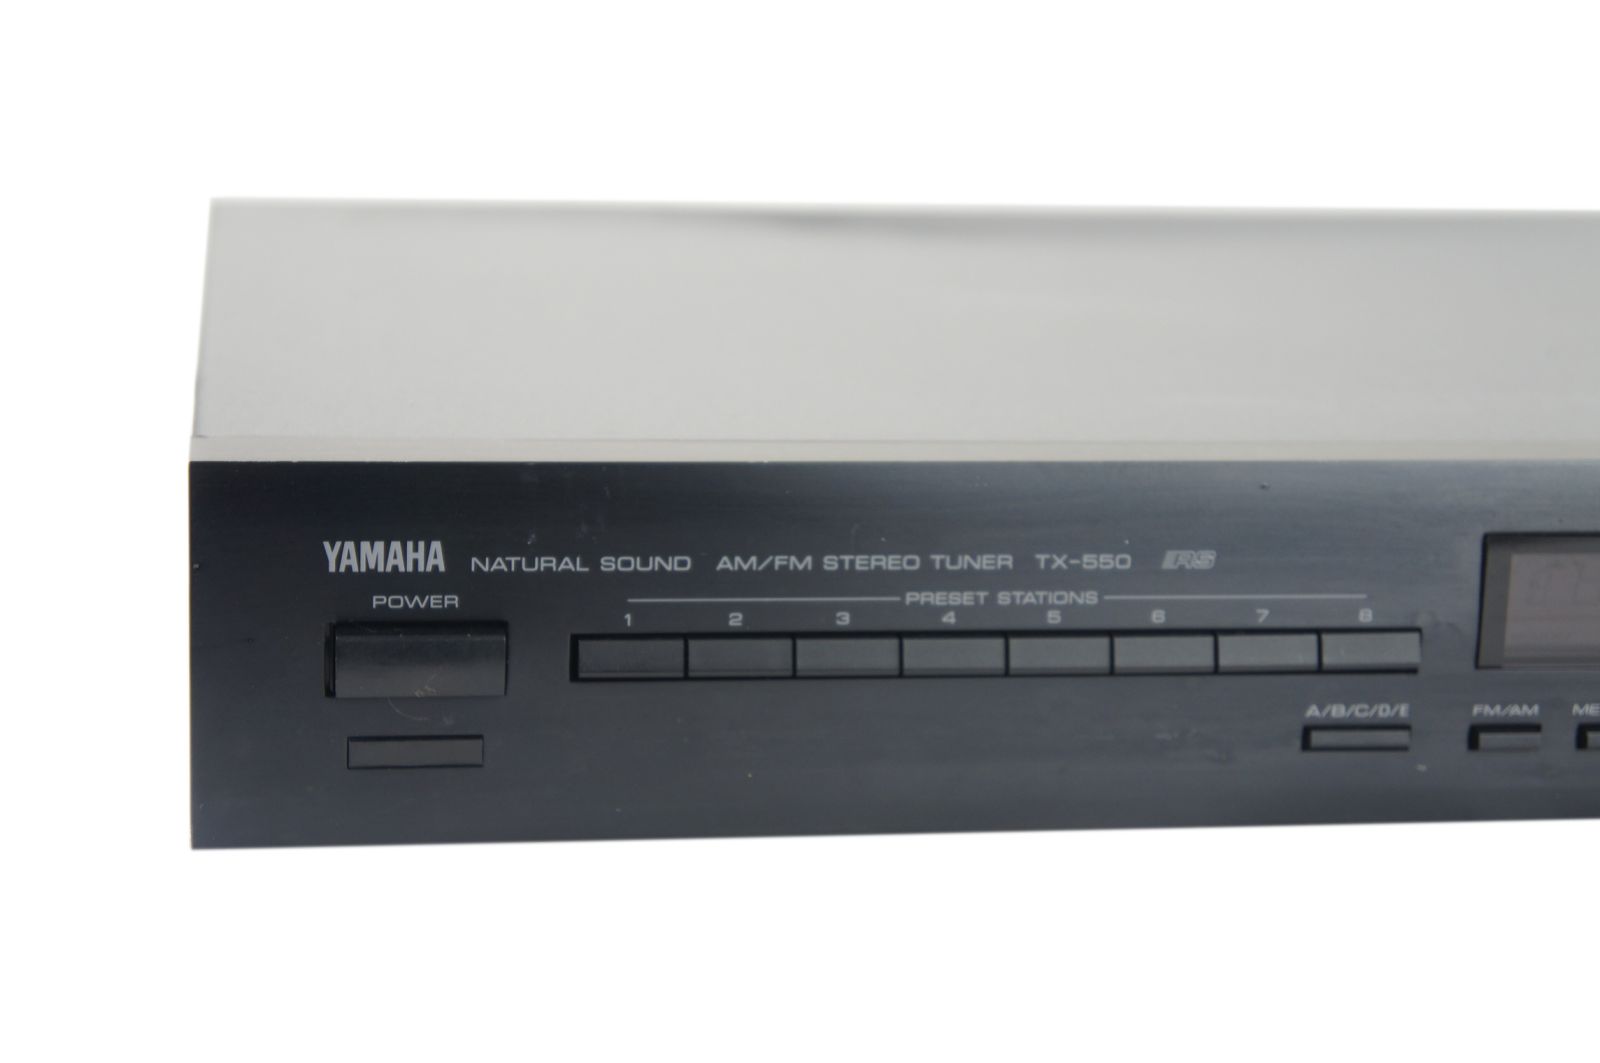 Yamaha_TX-550_RS_FM-AM_Tuner_04